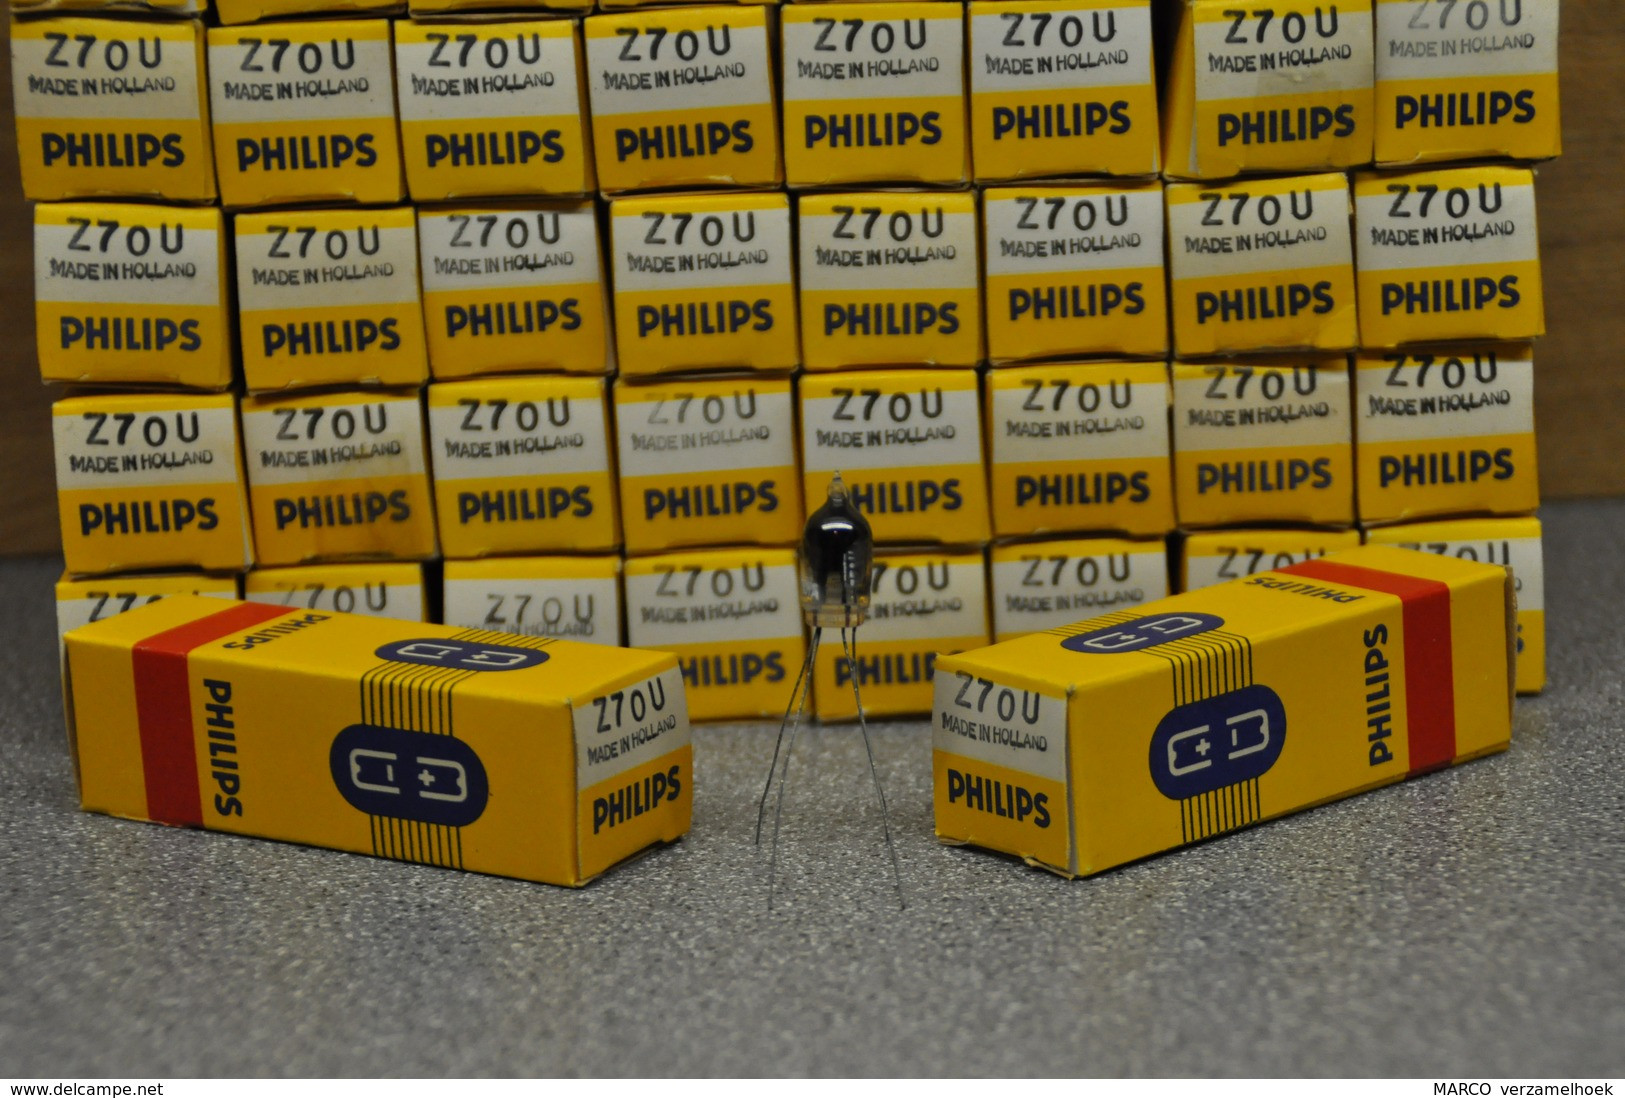 Philips Buis-röhre-tube Z70U - (7710 - GR43) Thyratron Tube New (jukebox) Neonbuisje Glimmröhre - Elektronenbuis